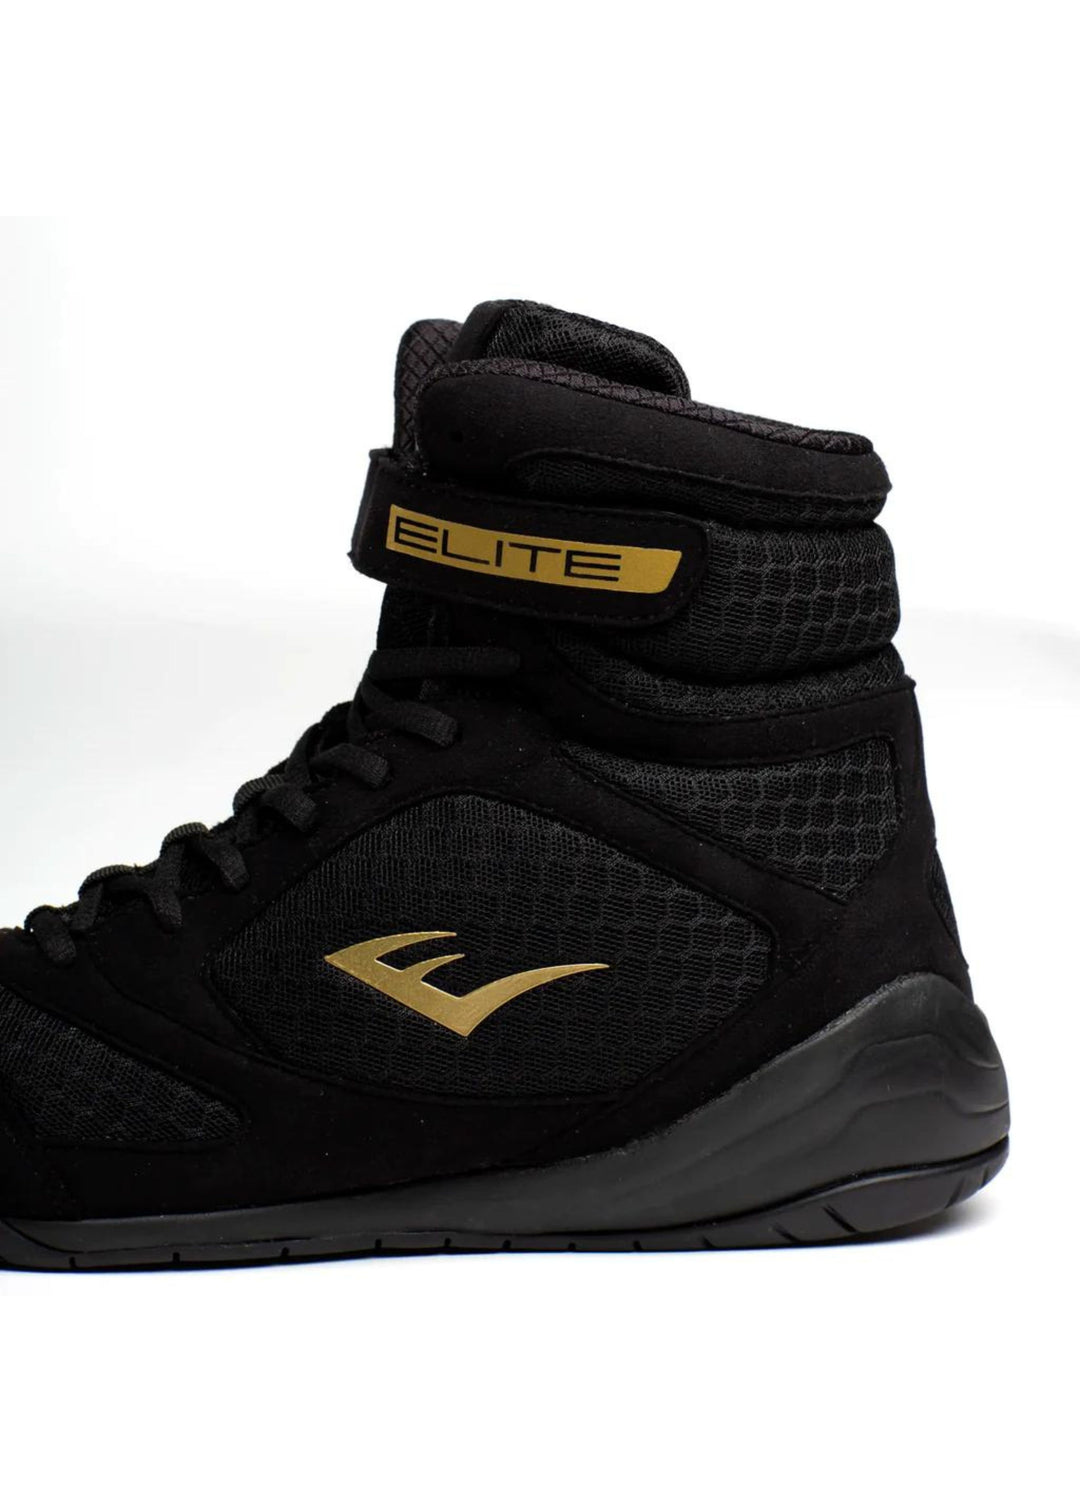 EVERLAST Elite 2 Boxing Shoes - Black/Gold